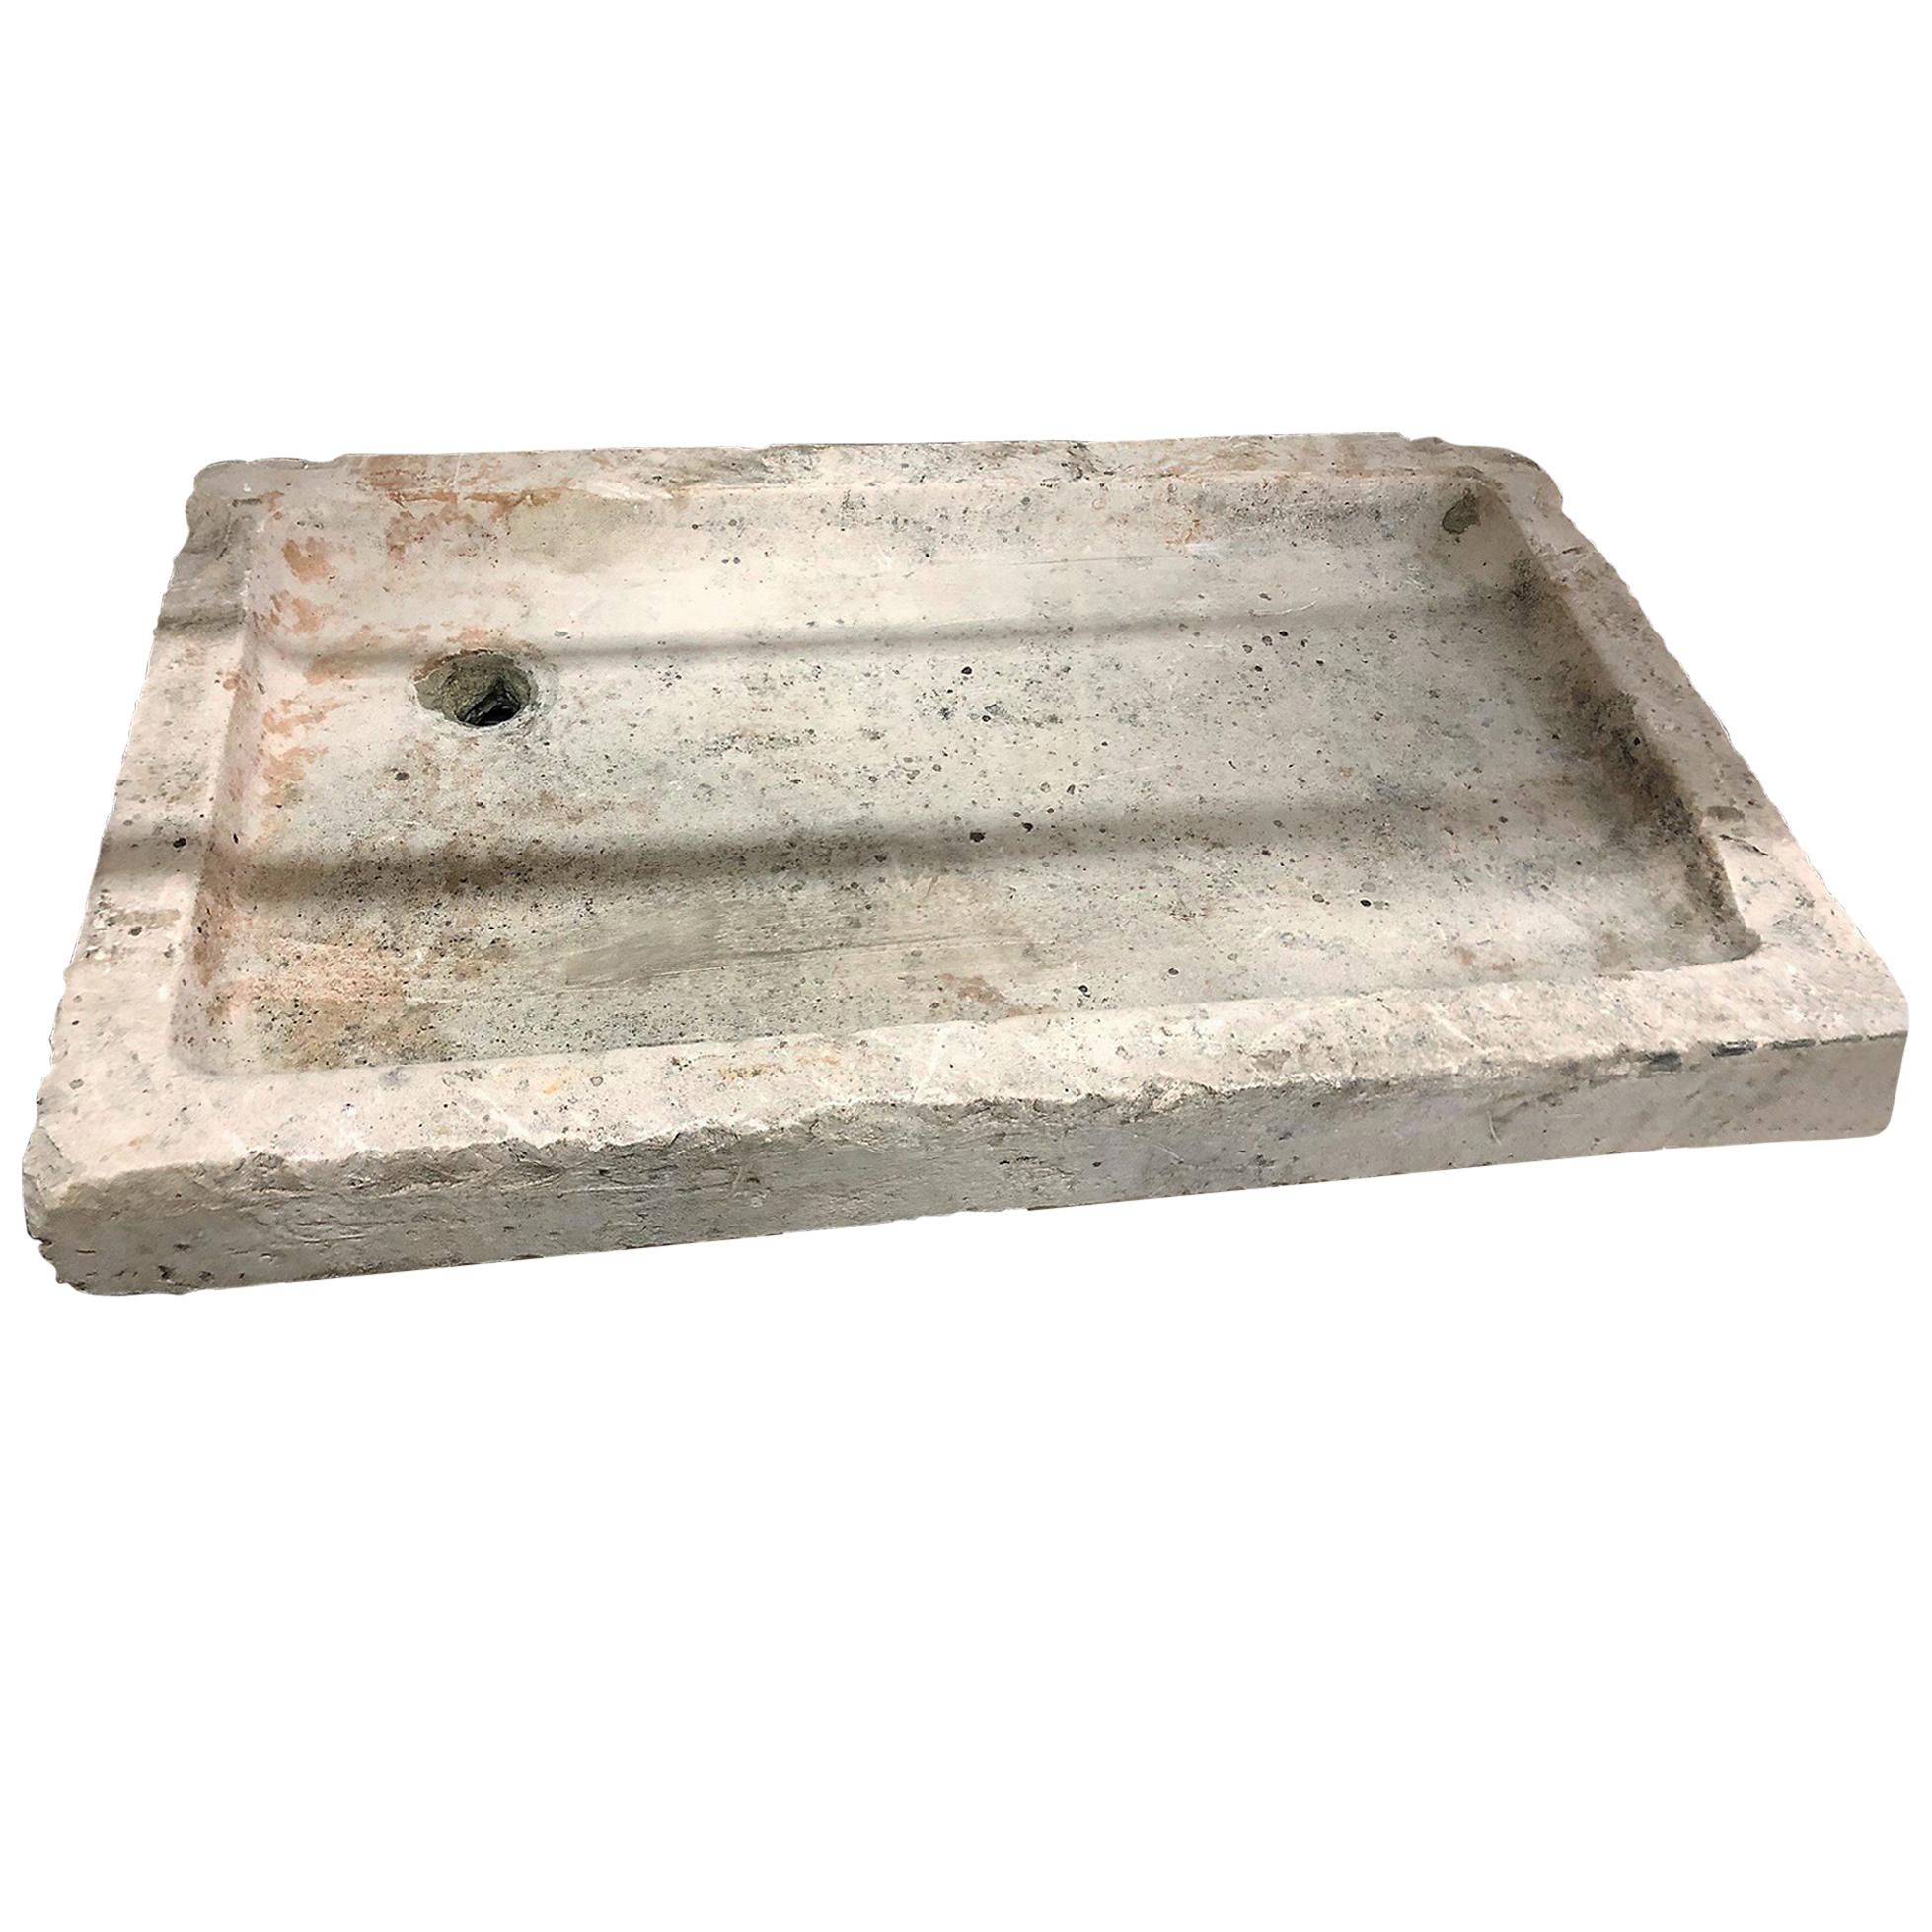 Antique French Limestone Sink